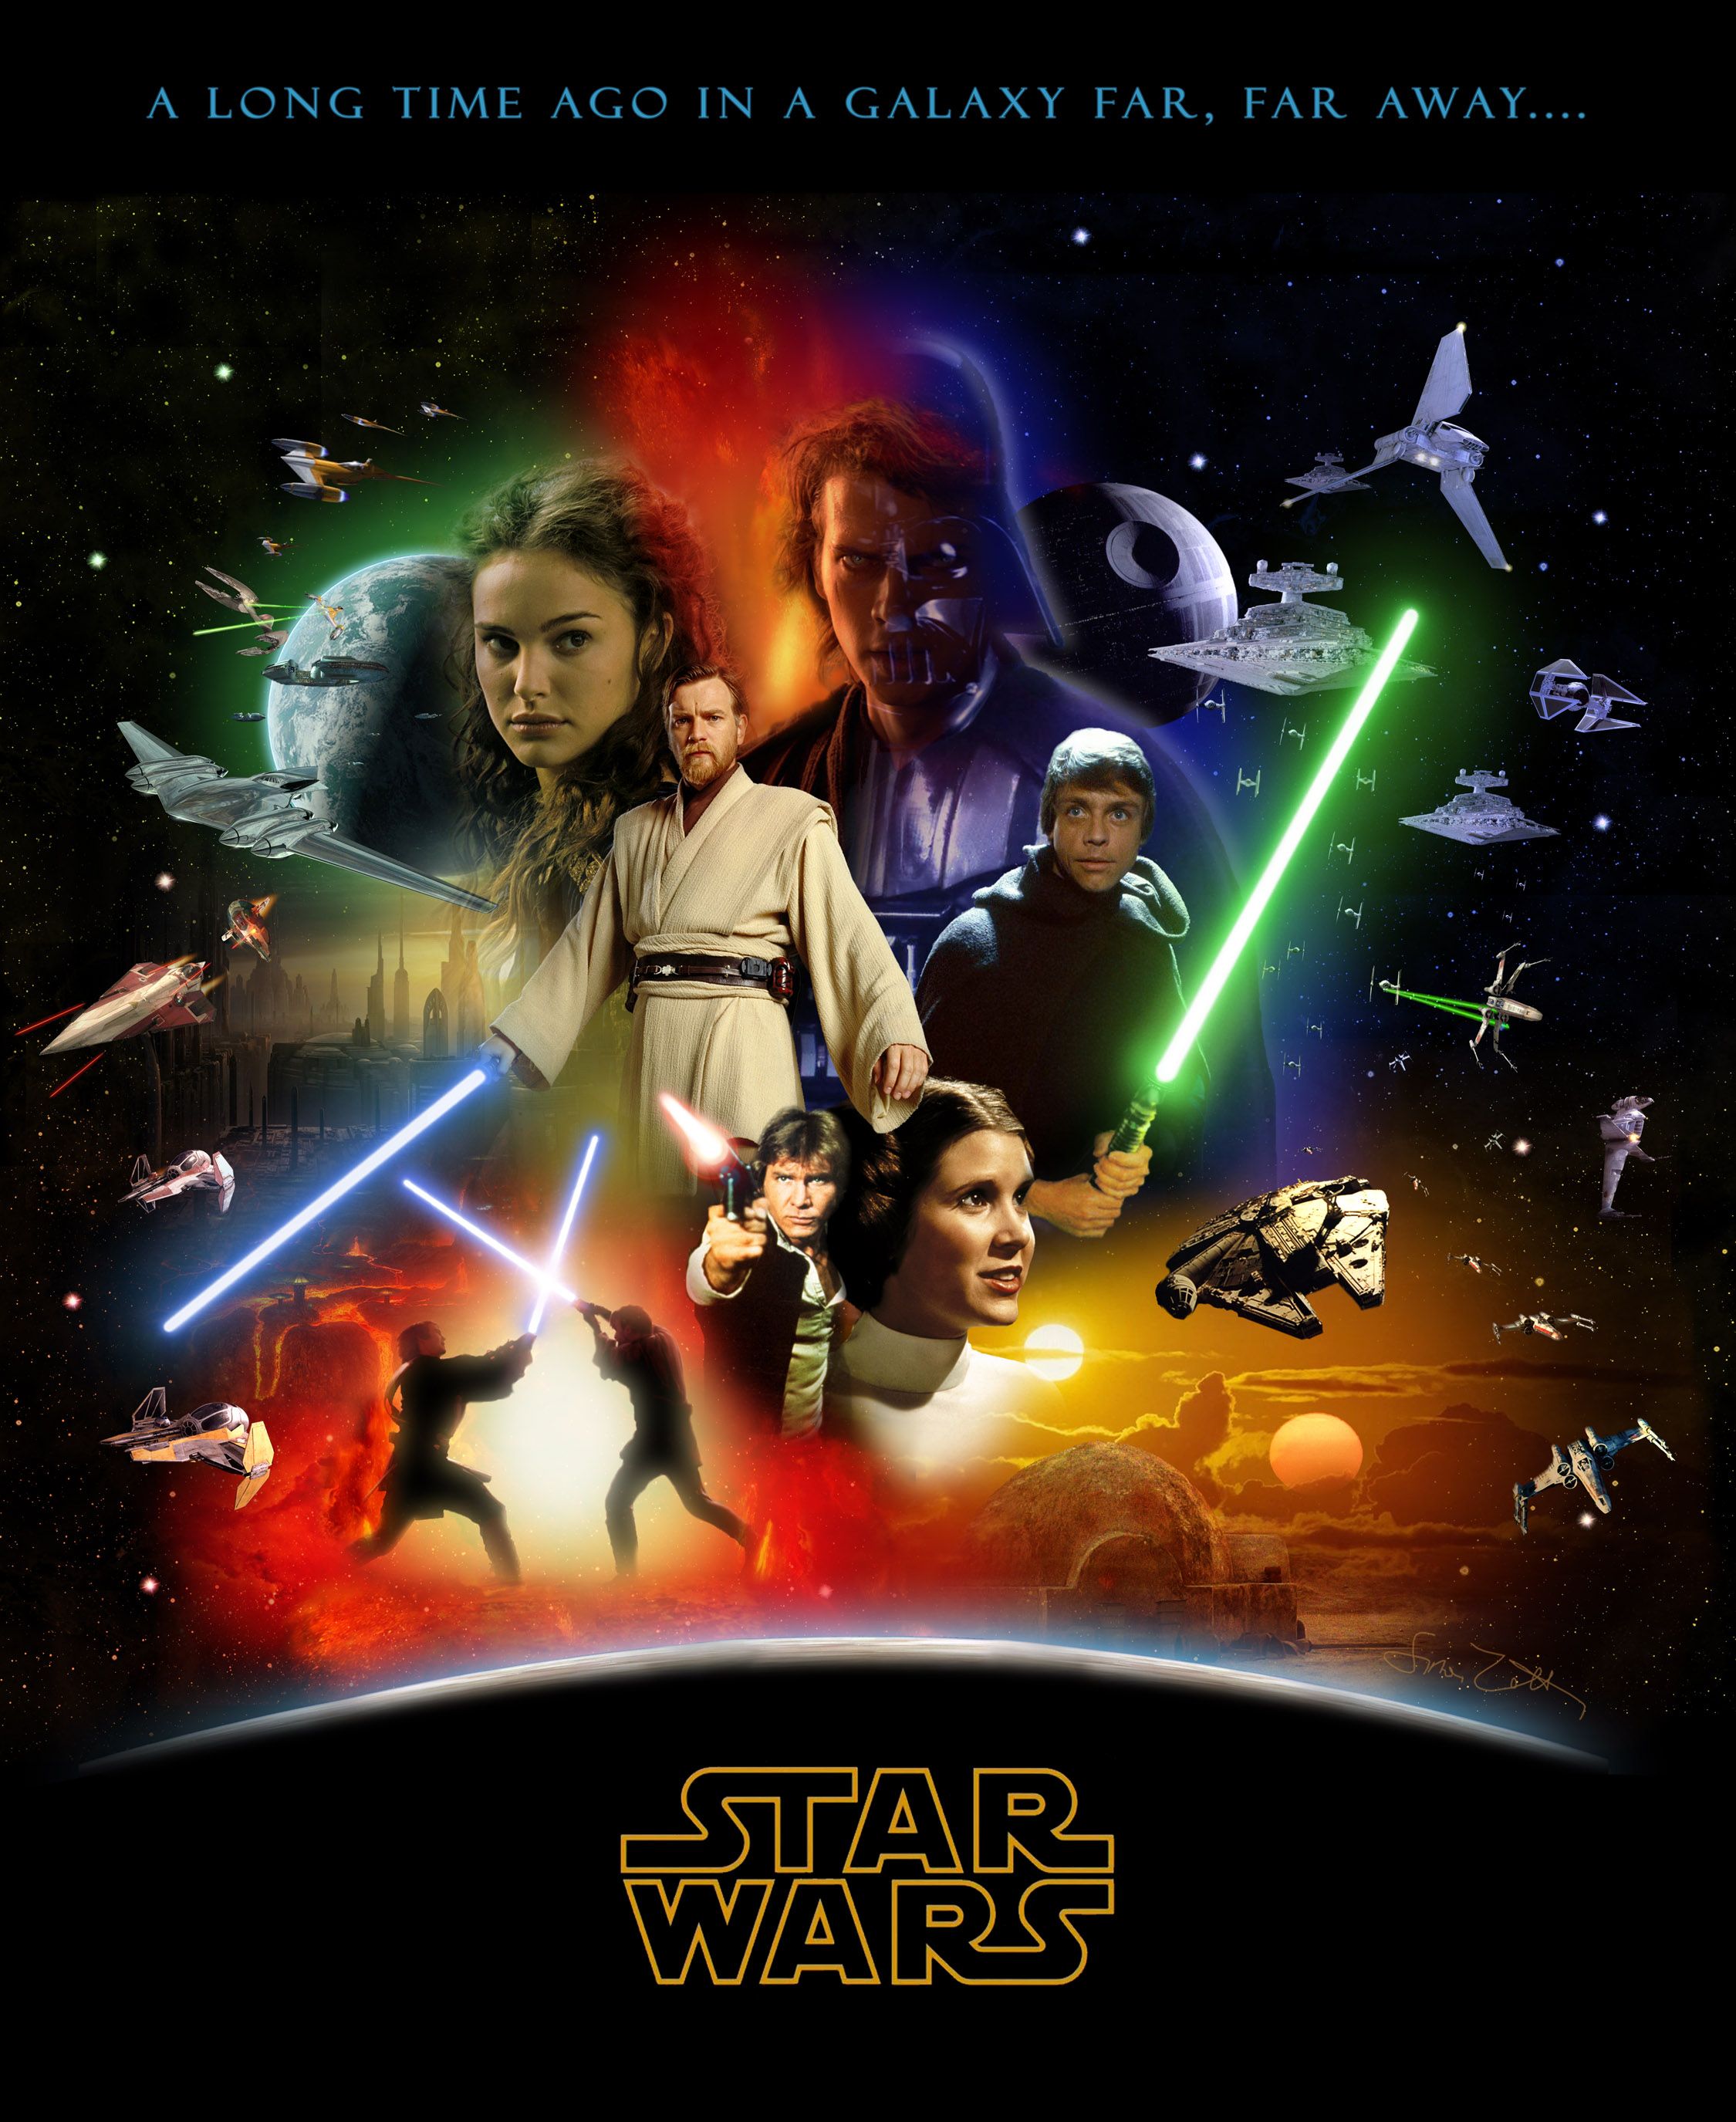 Star Wars Saga Poster 2. The Art Mad